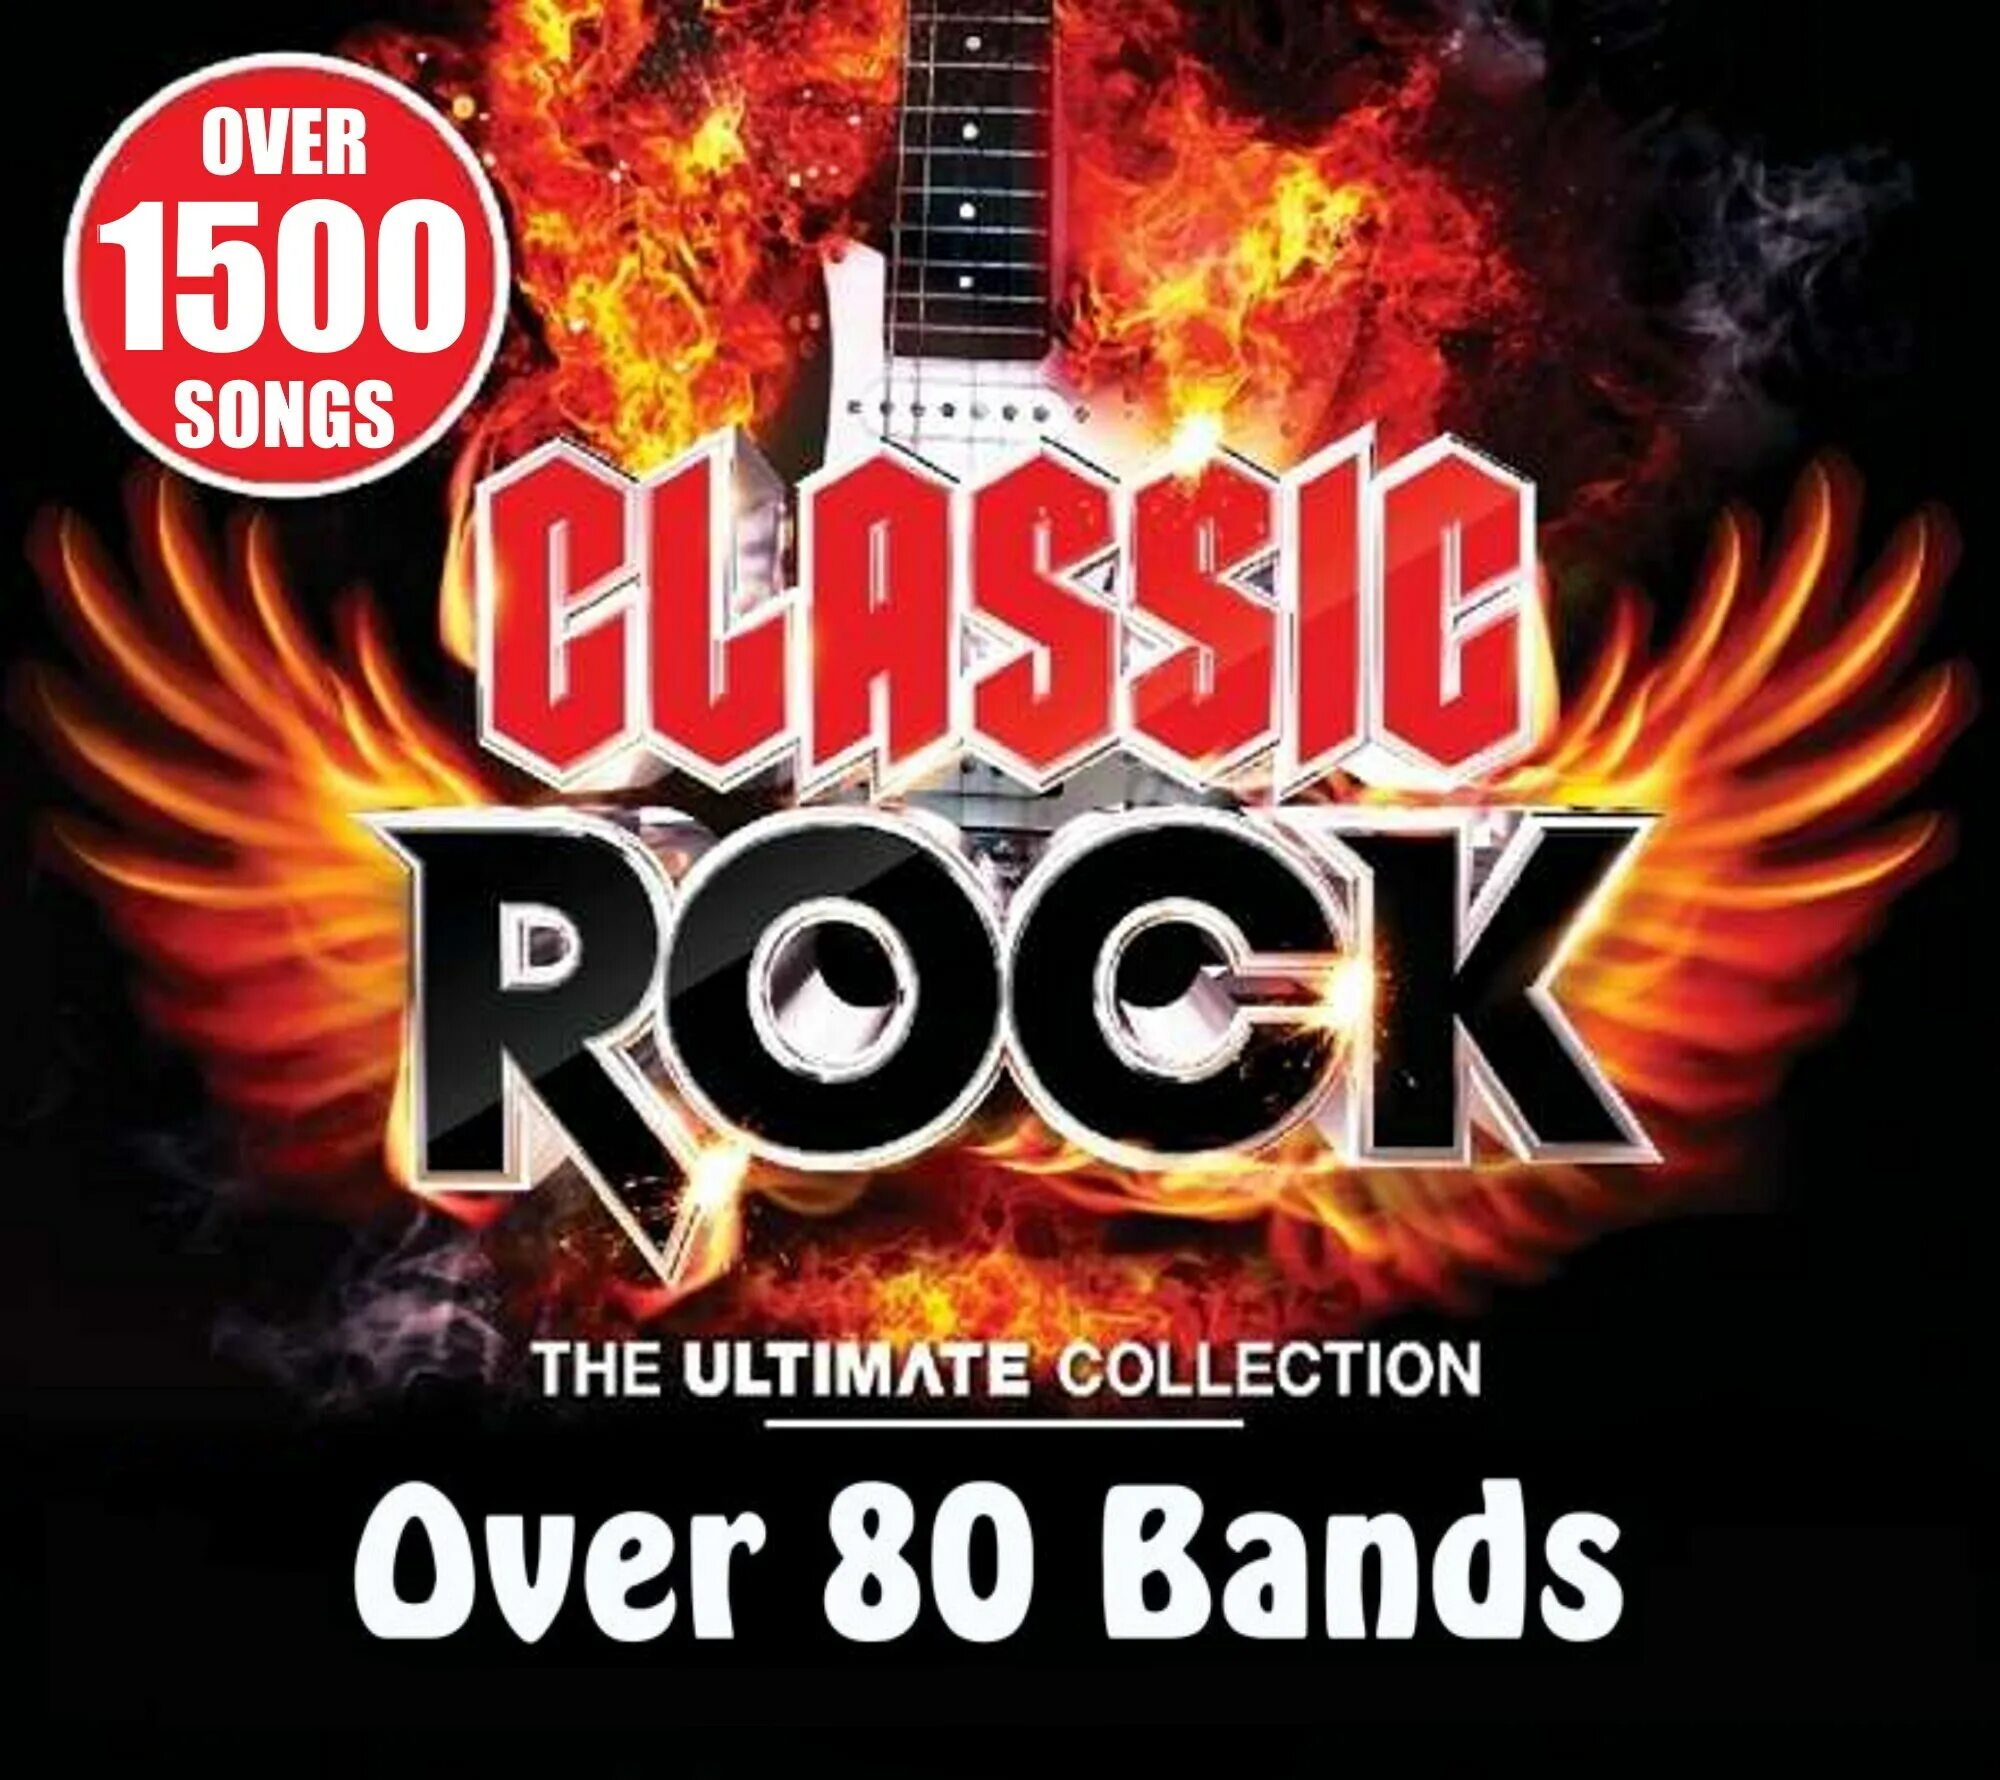 Rock CD. #100 Hits Rock. Classic Rock. 5 Rocks.